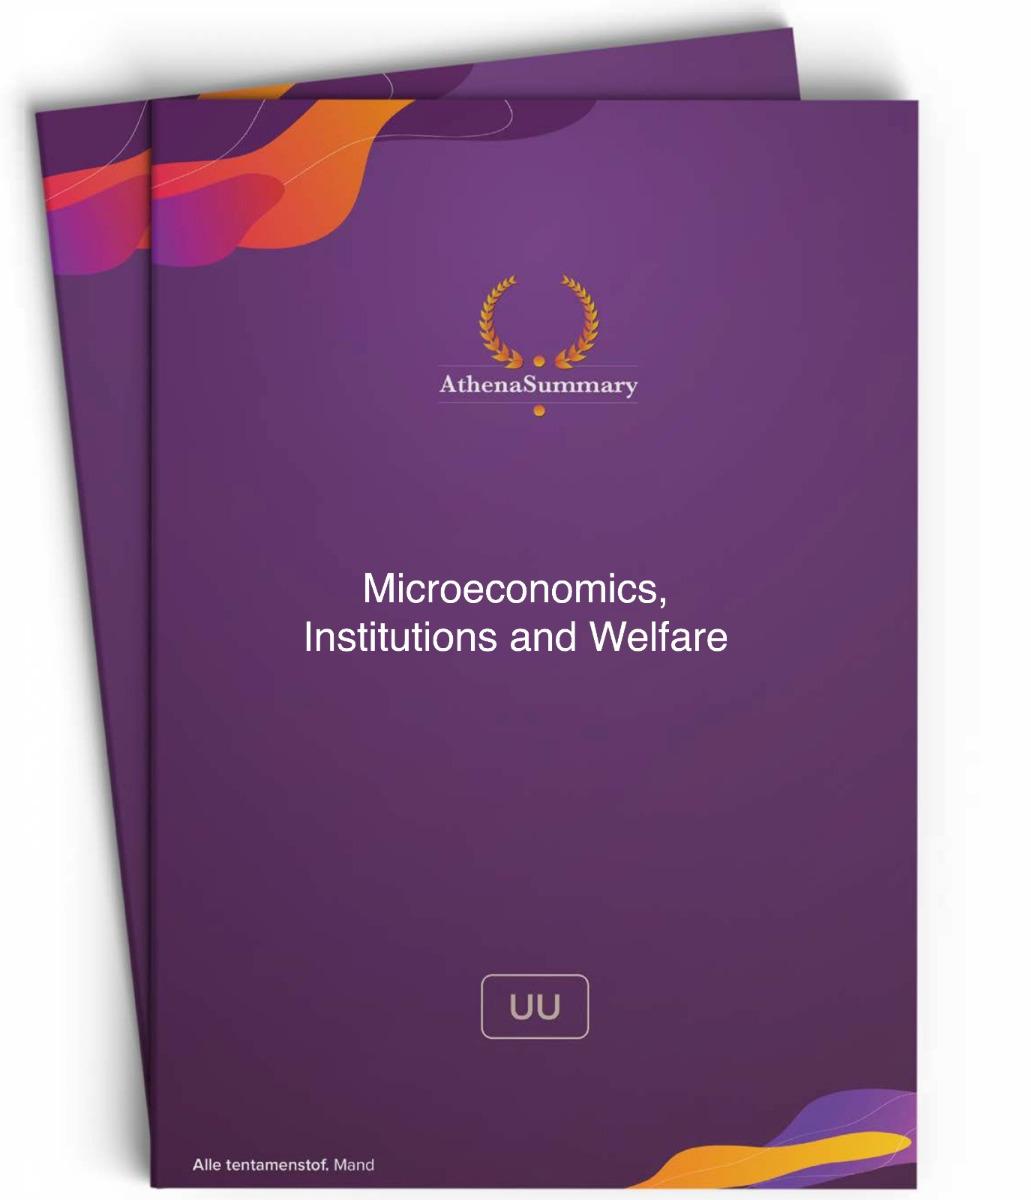 Literature Summary: Microeconomics, Institutions and Welfare